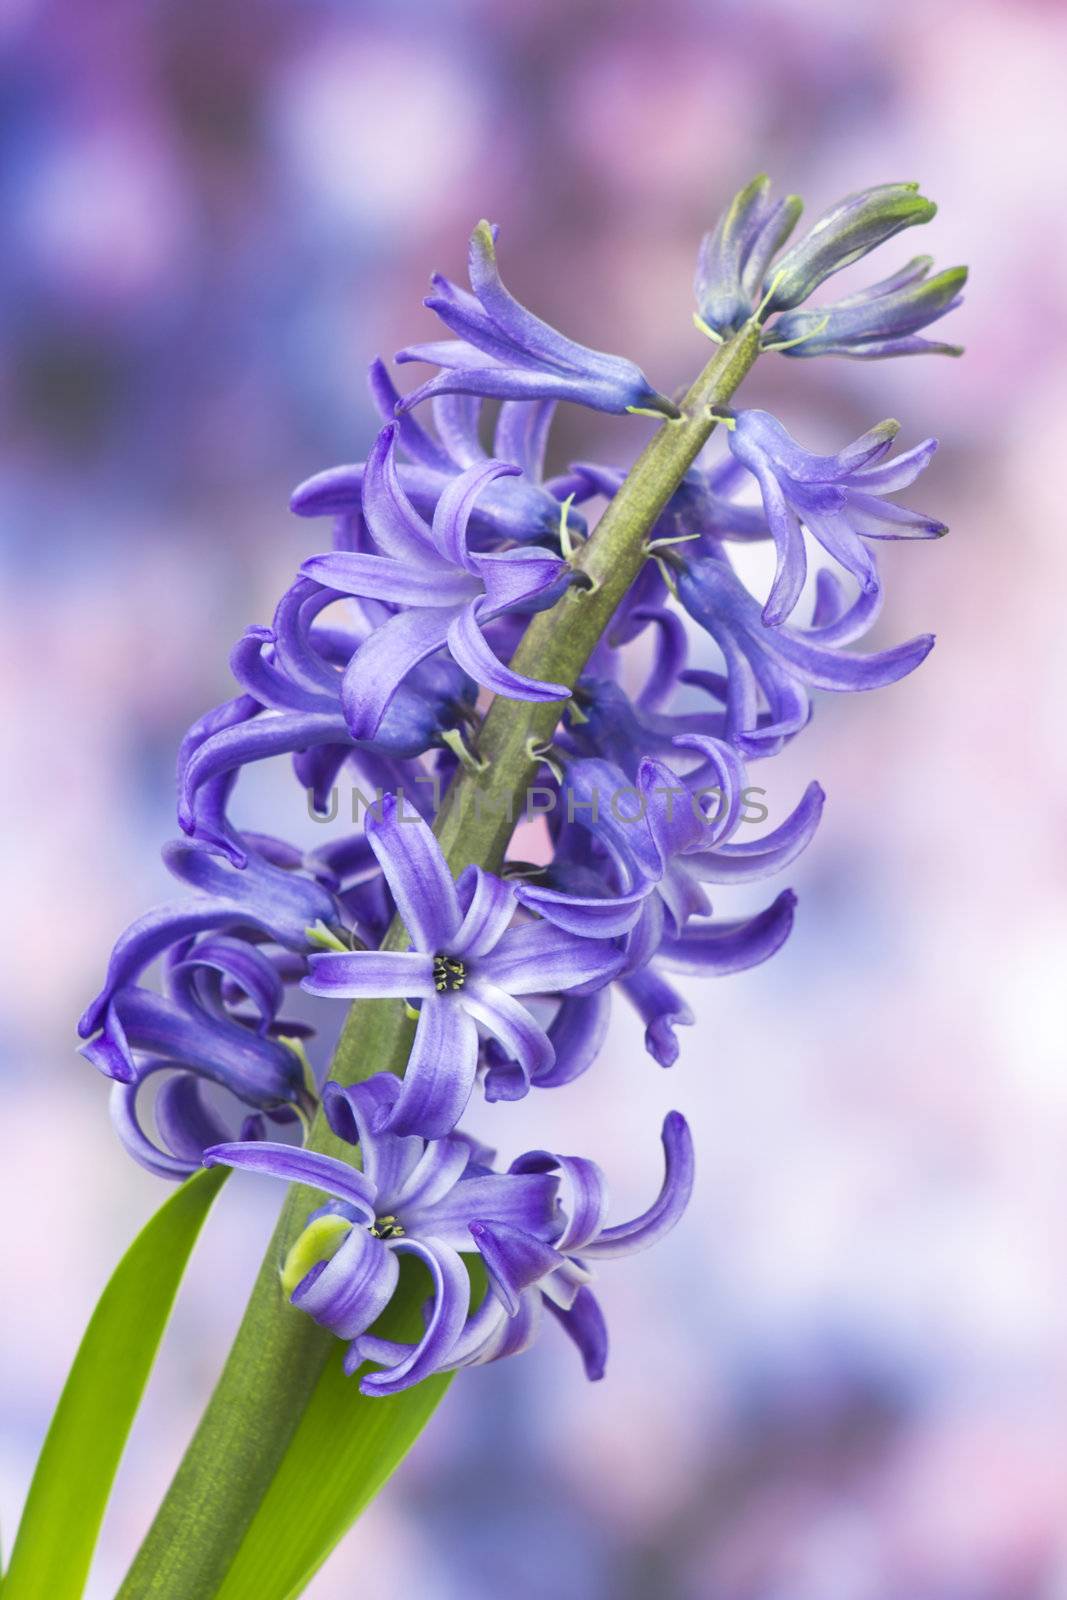 blooming hyacinth flowers by miradrozdowski